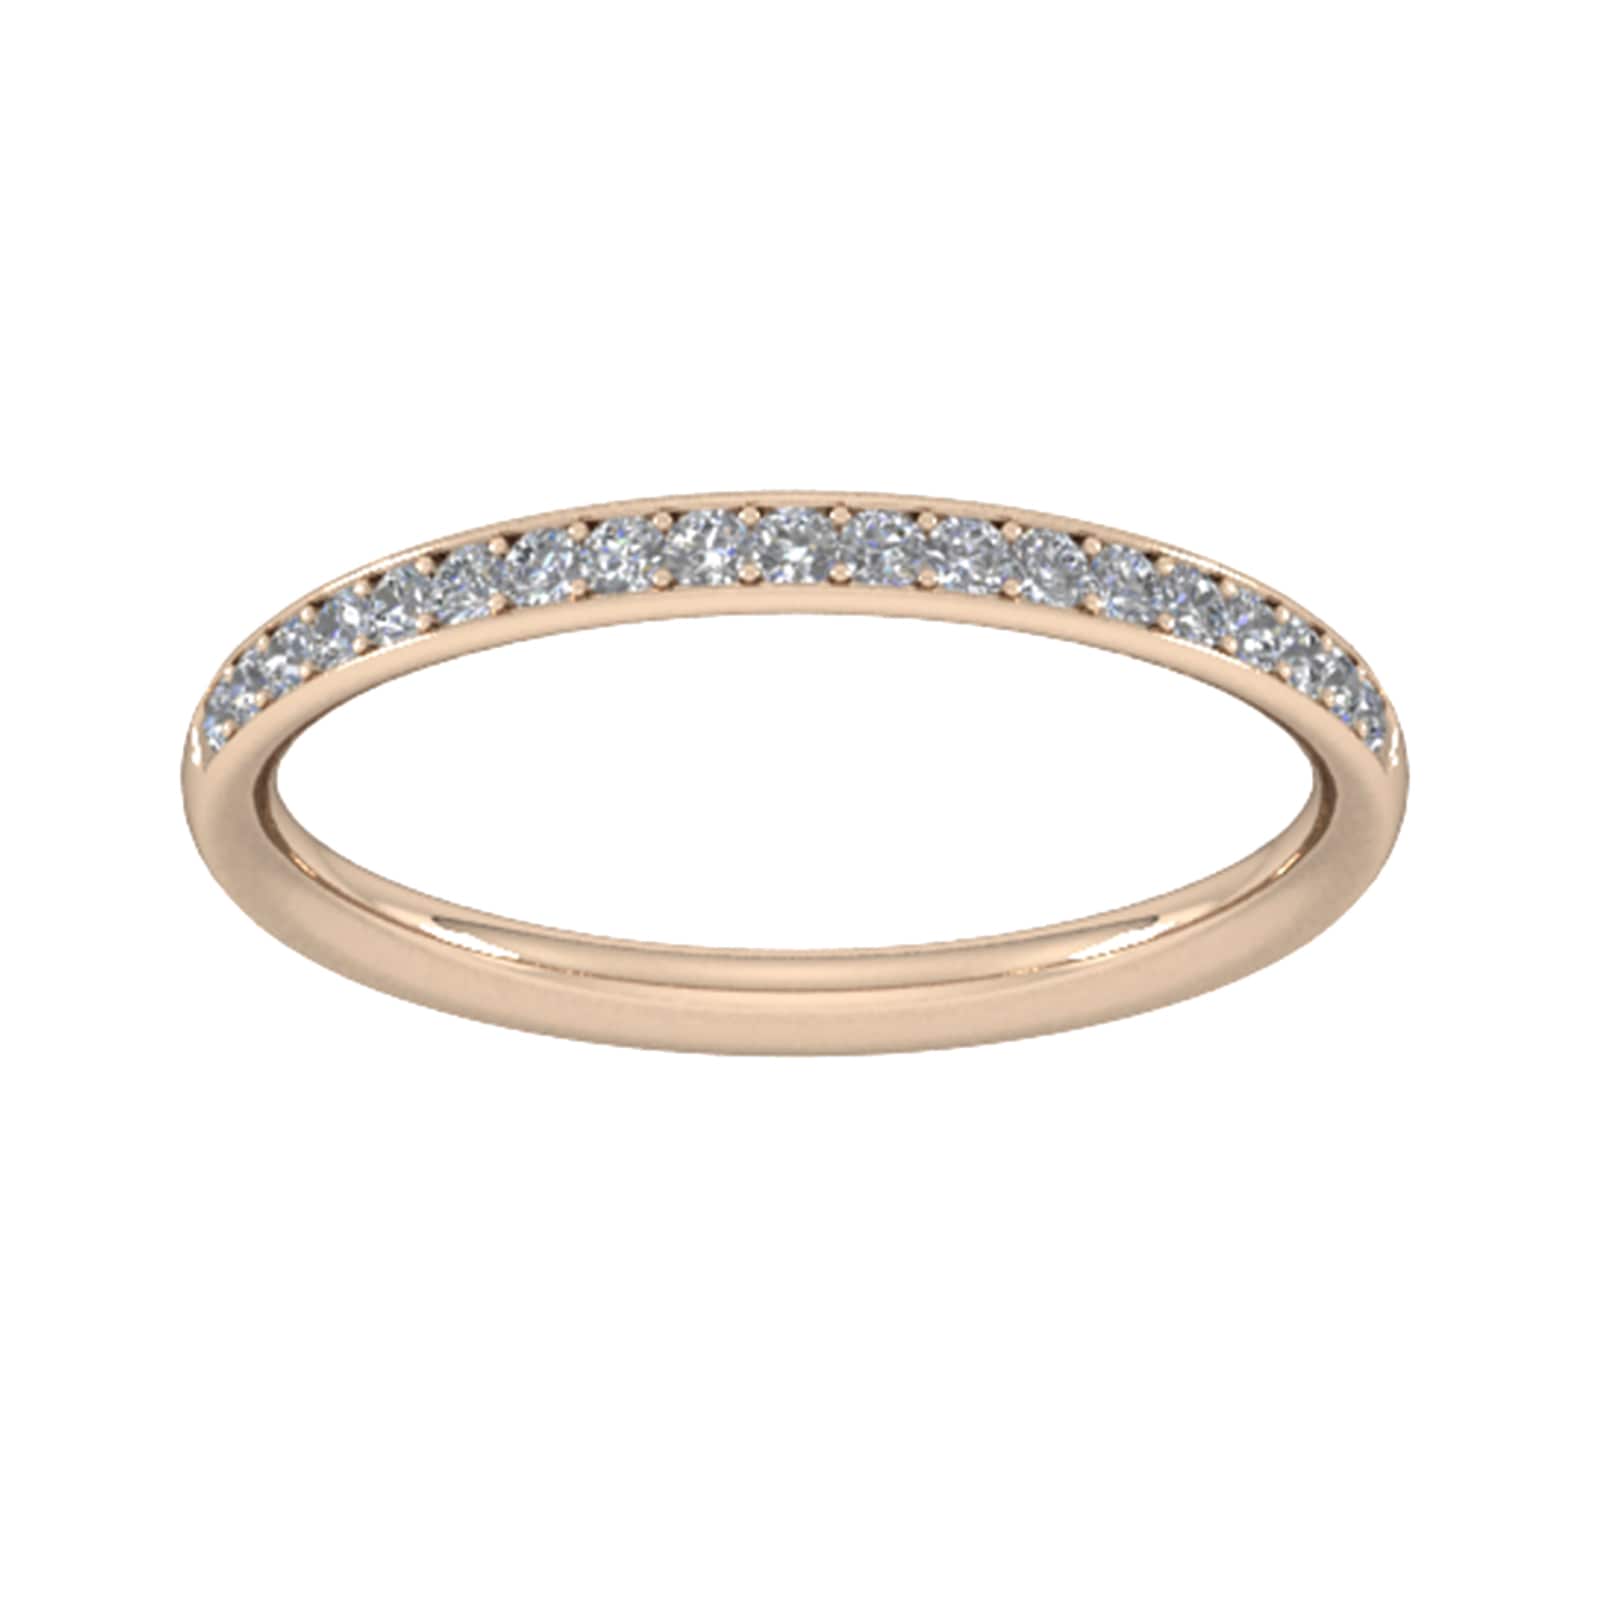 0.18 Carat Total Weight Brilliant Cut Grain Set Diamond Wedding Ring In 9 Carat Rose Gold - Ring Size S